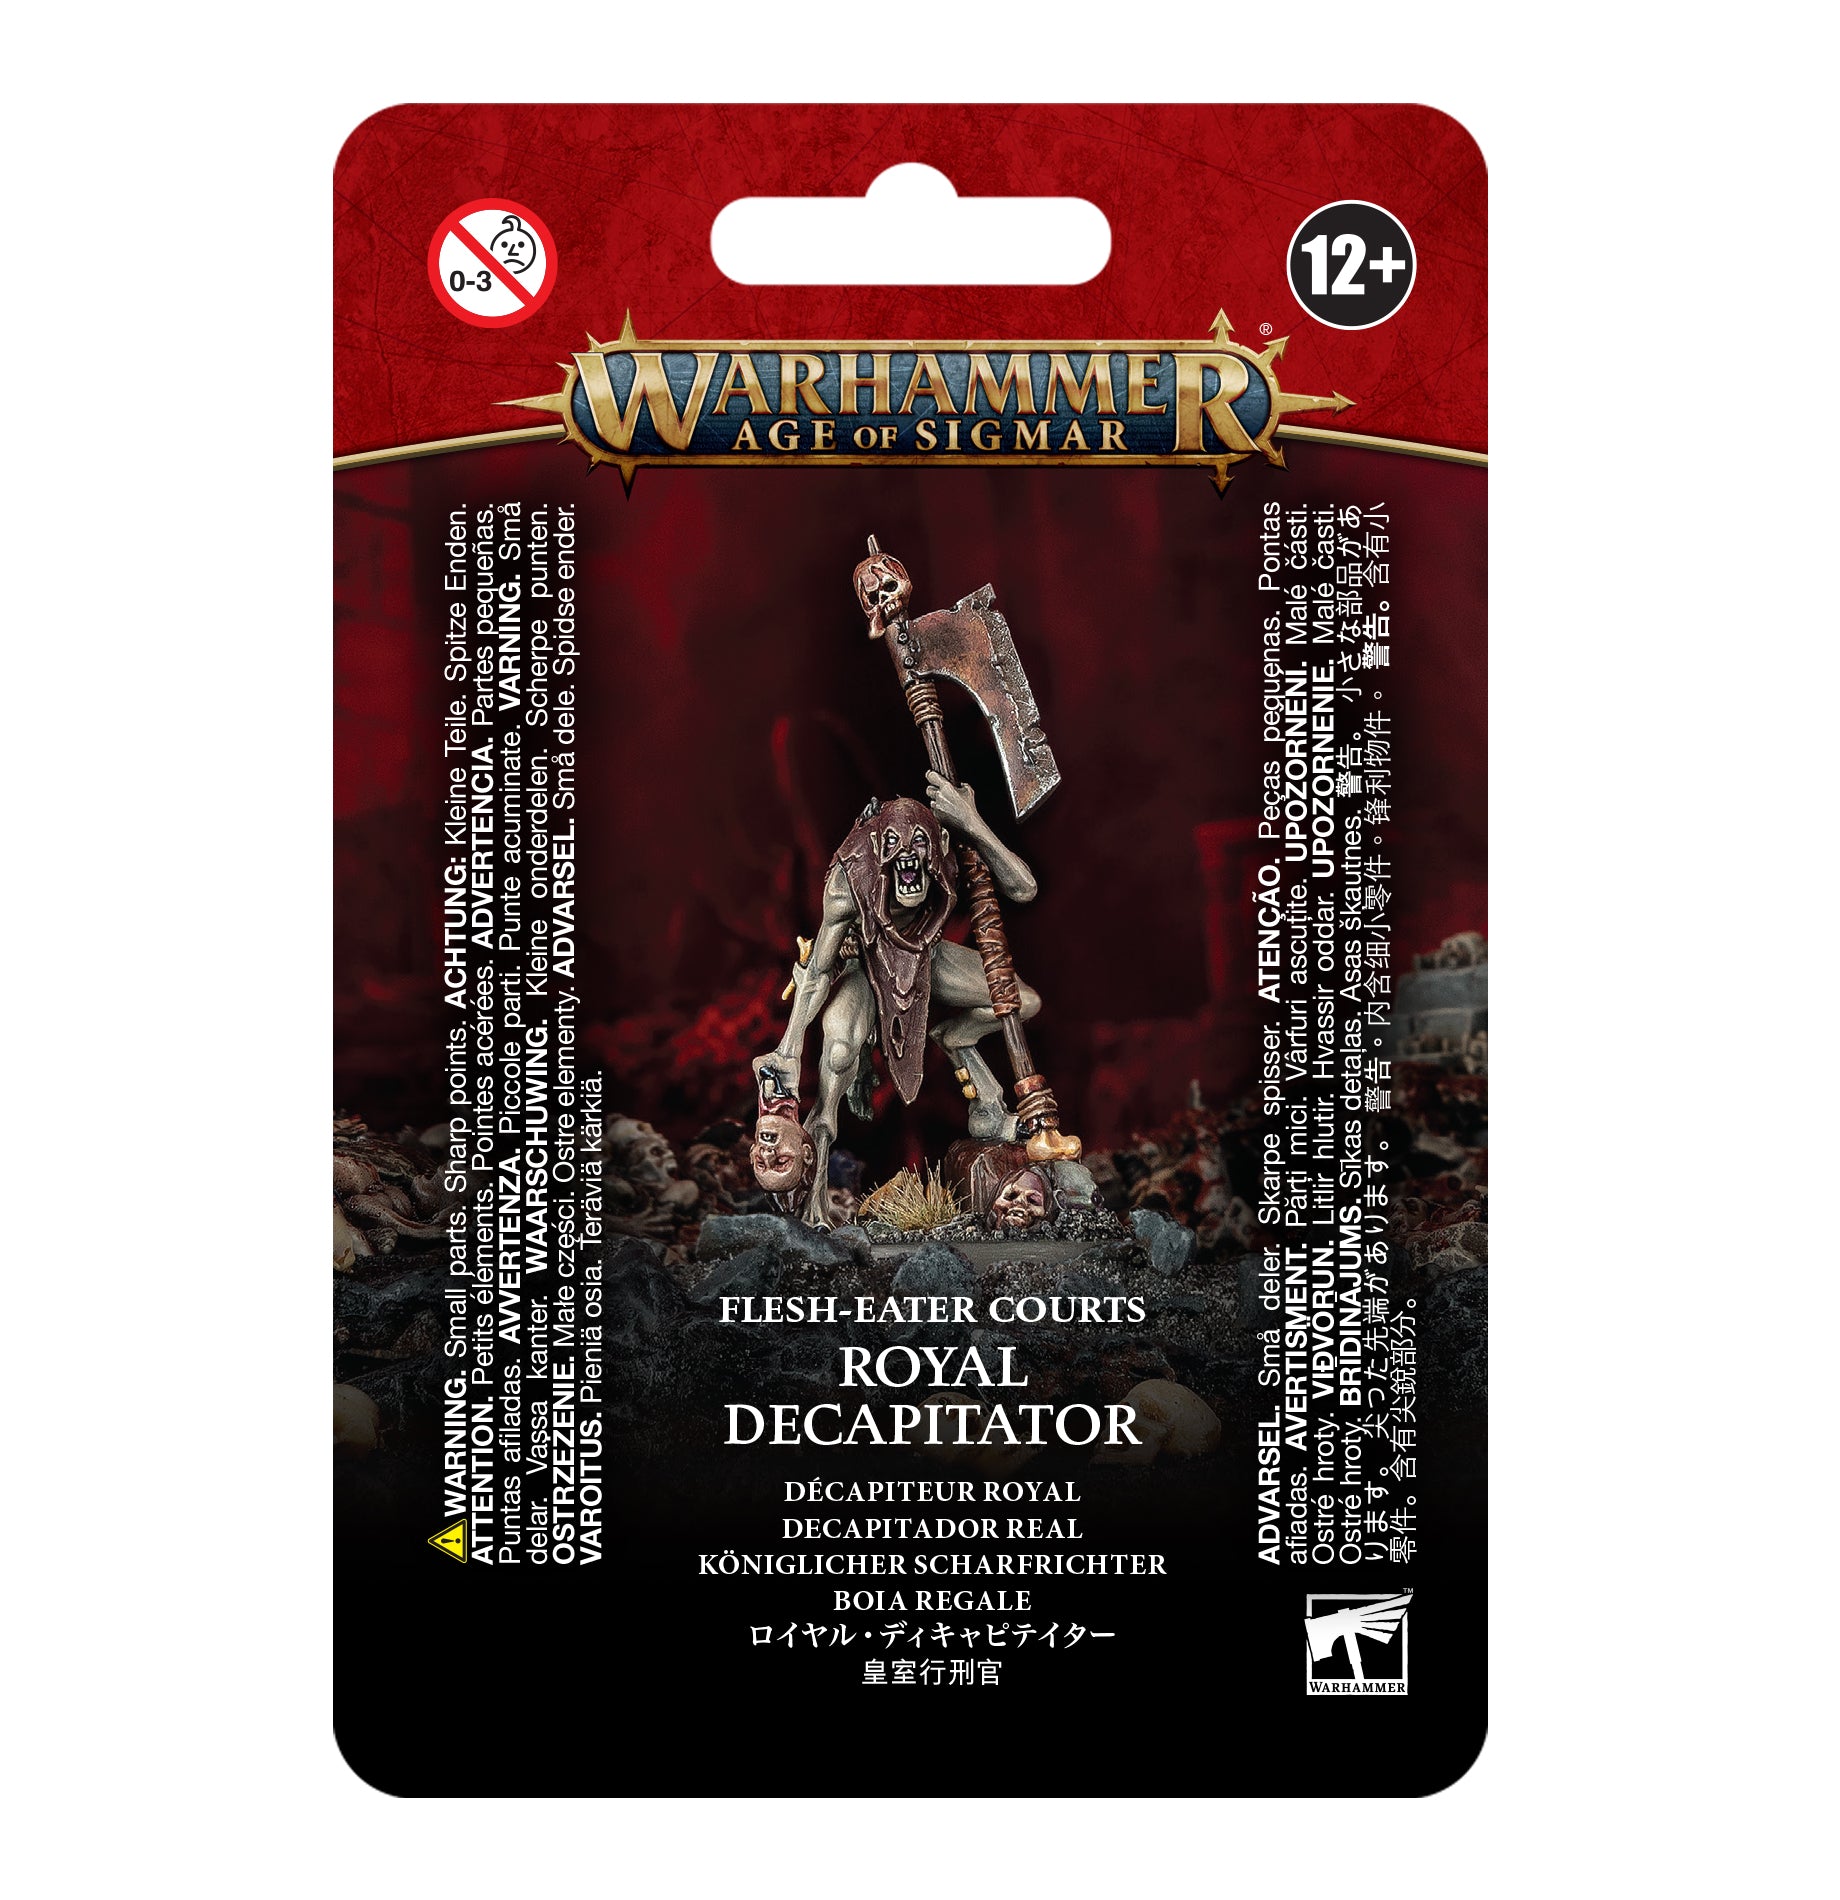 Warhammer Age of Sigmar: Felsh-Eater Courts Royal Decapitator